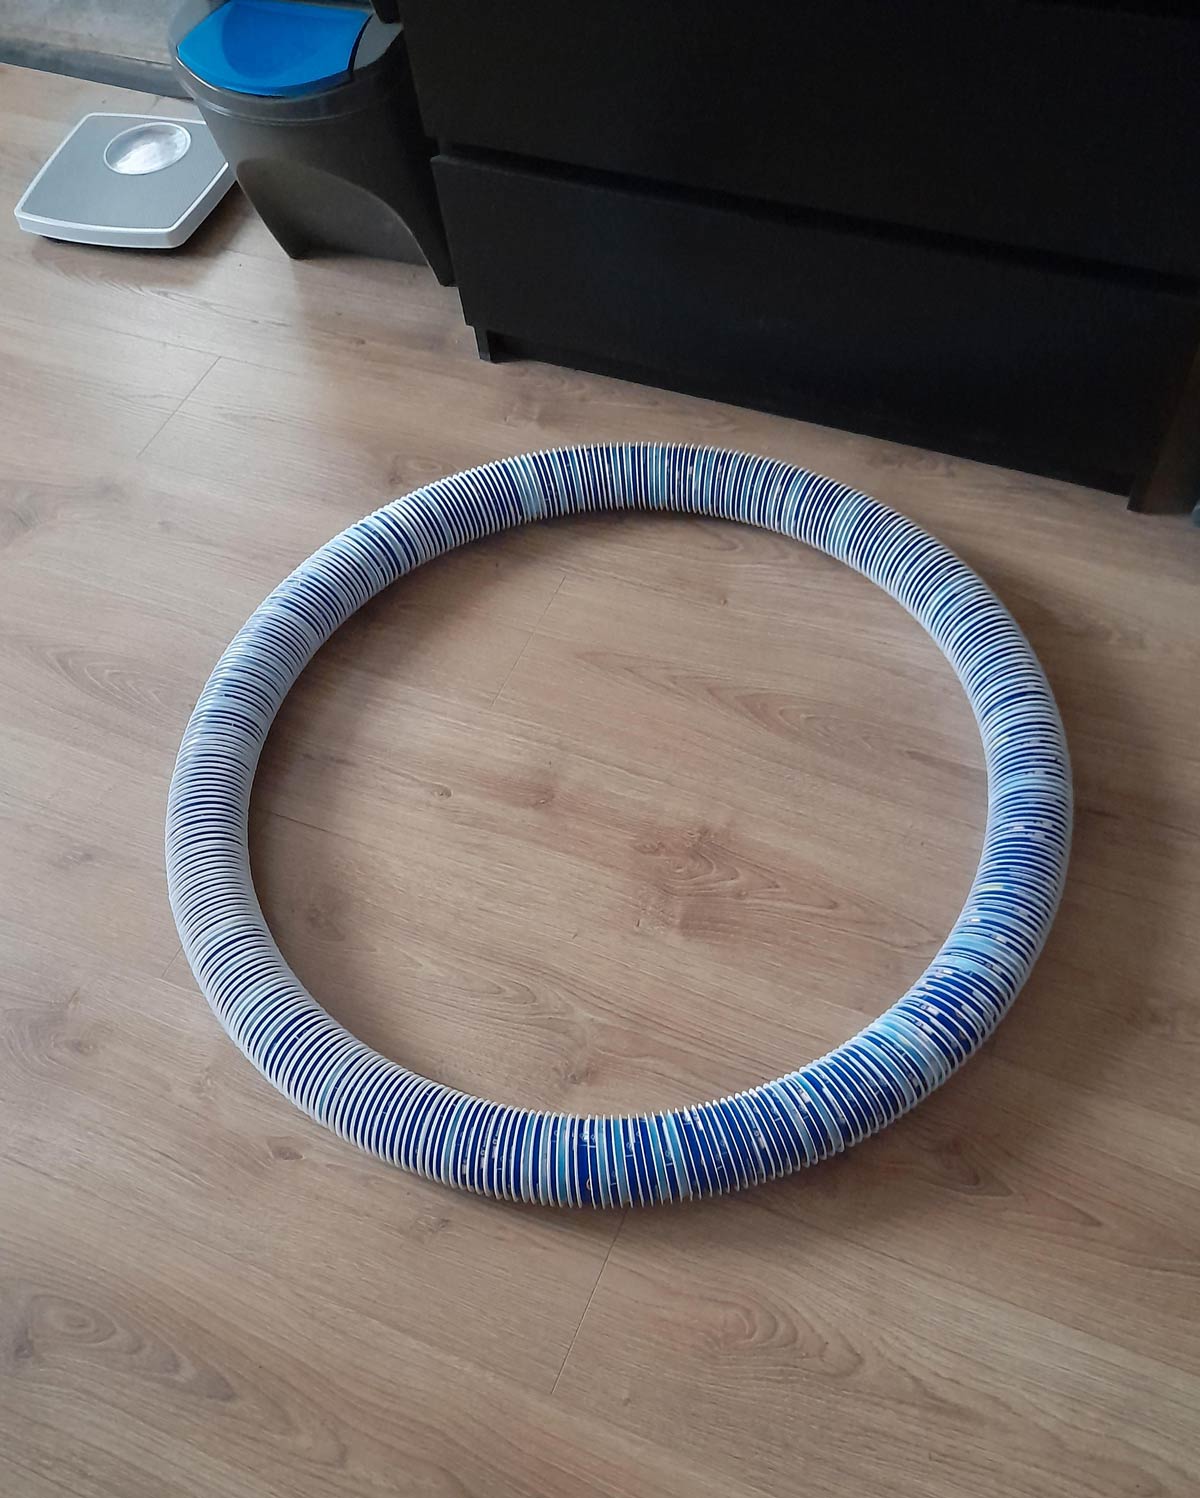 I made a circle using 360 yogurt cups